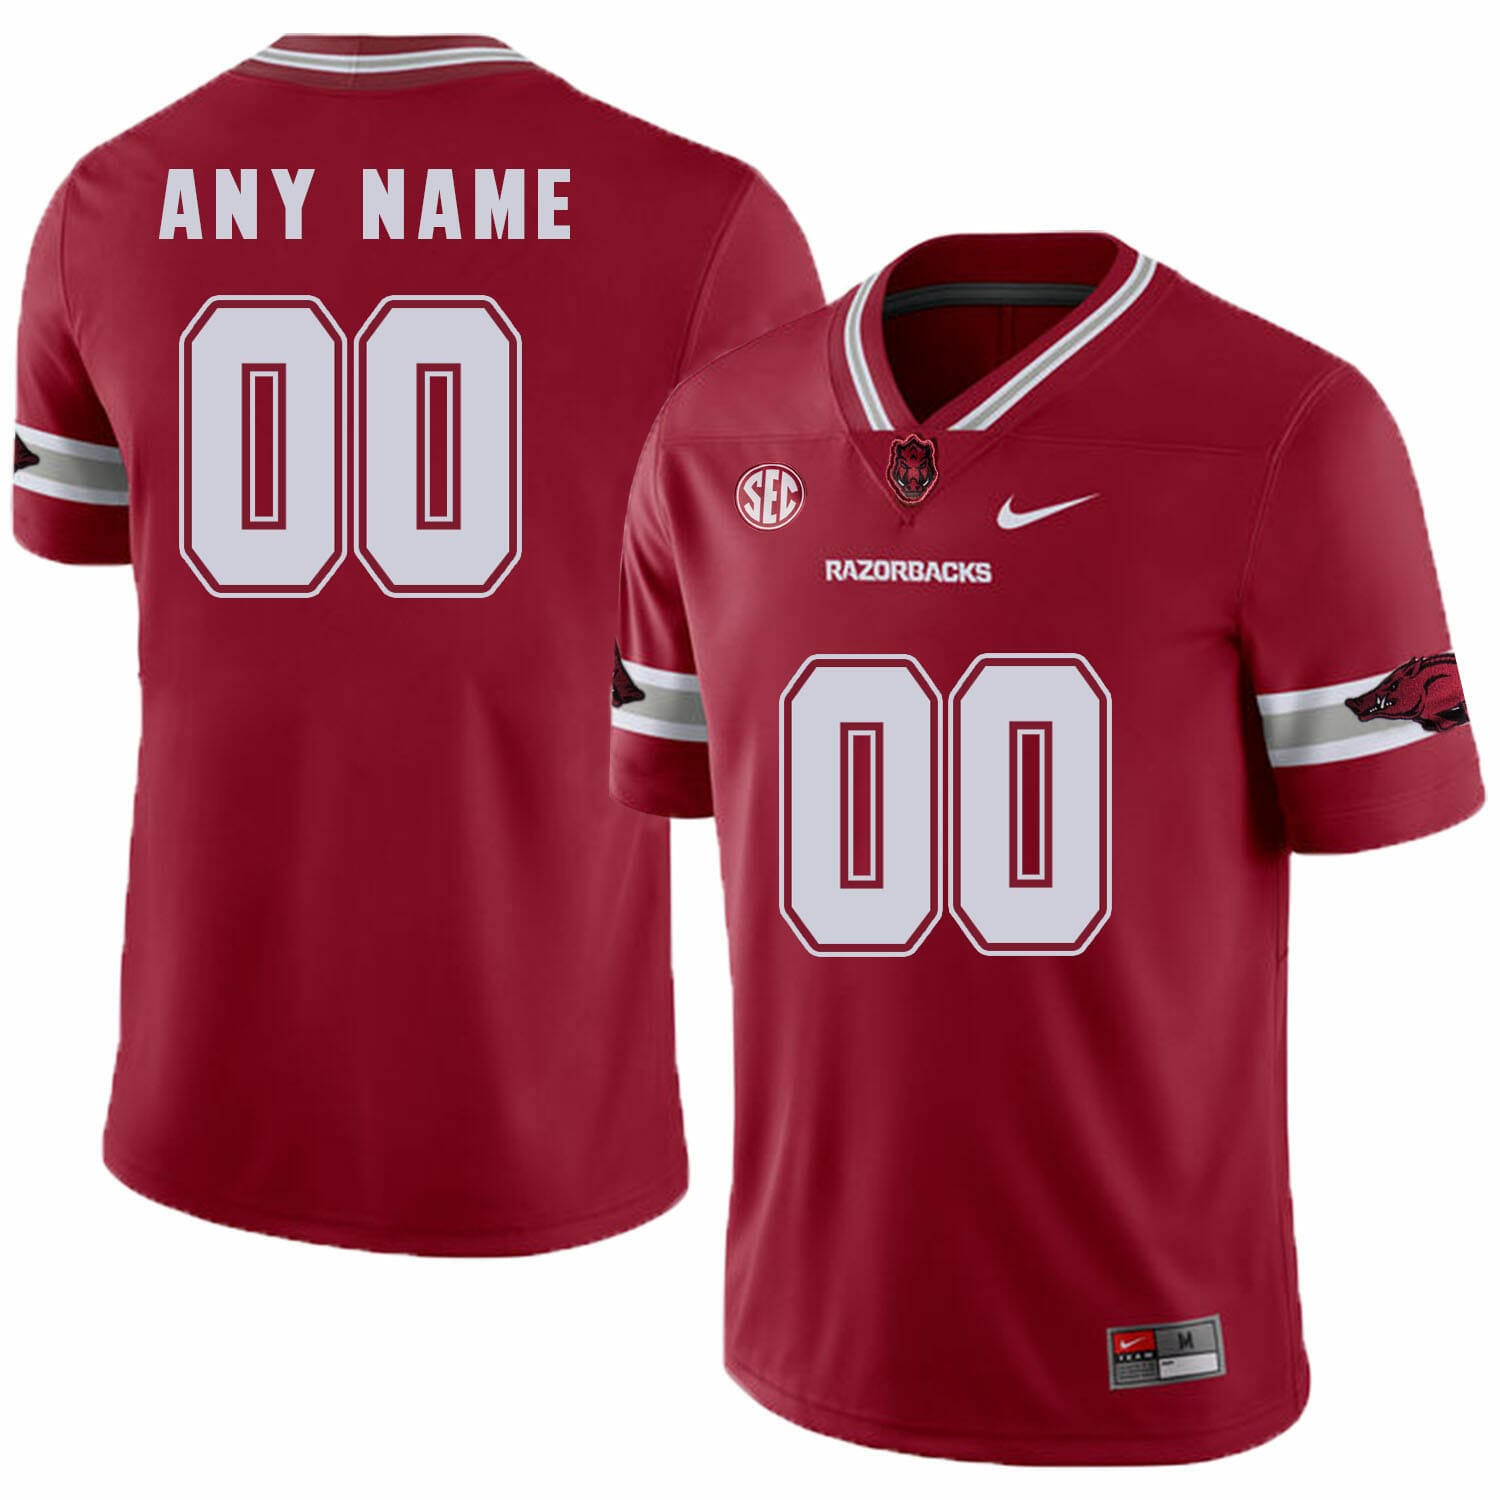 Arkansas Razorbacks Custom Name Number Football Jersey SEC Patch Red